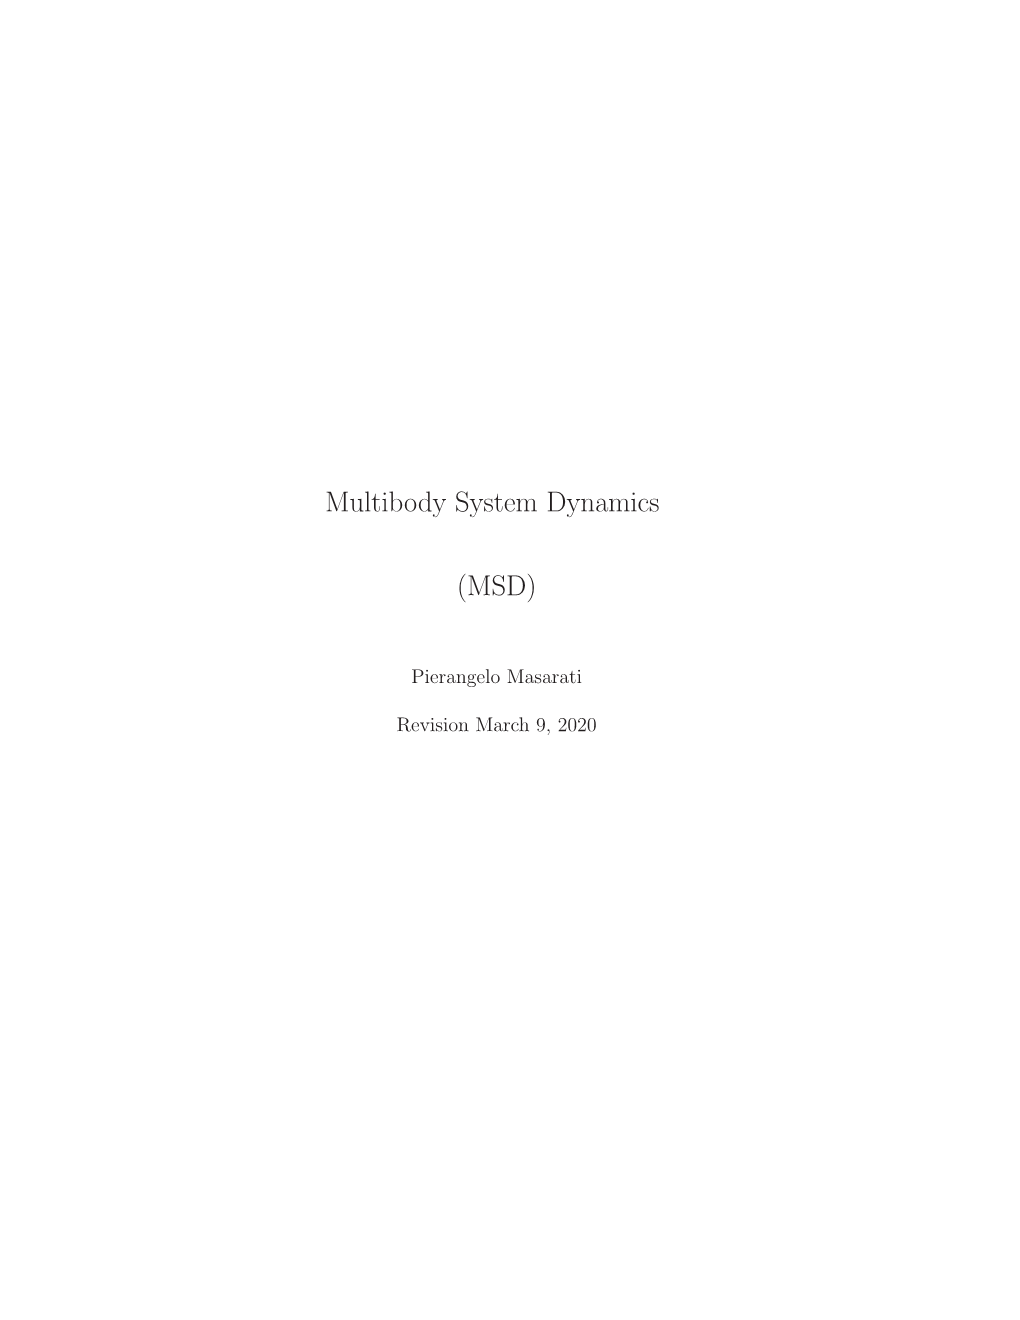 Multibody System Dynamics (MSD)